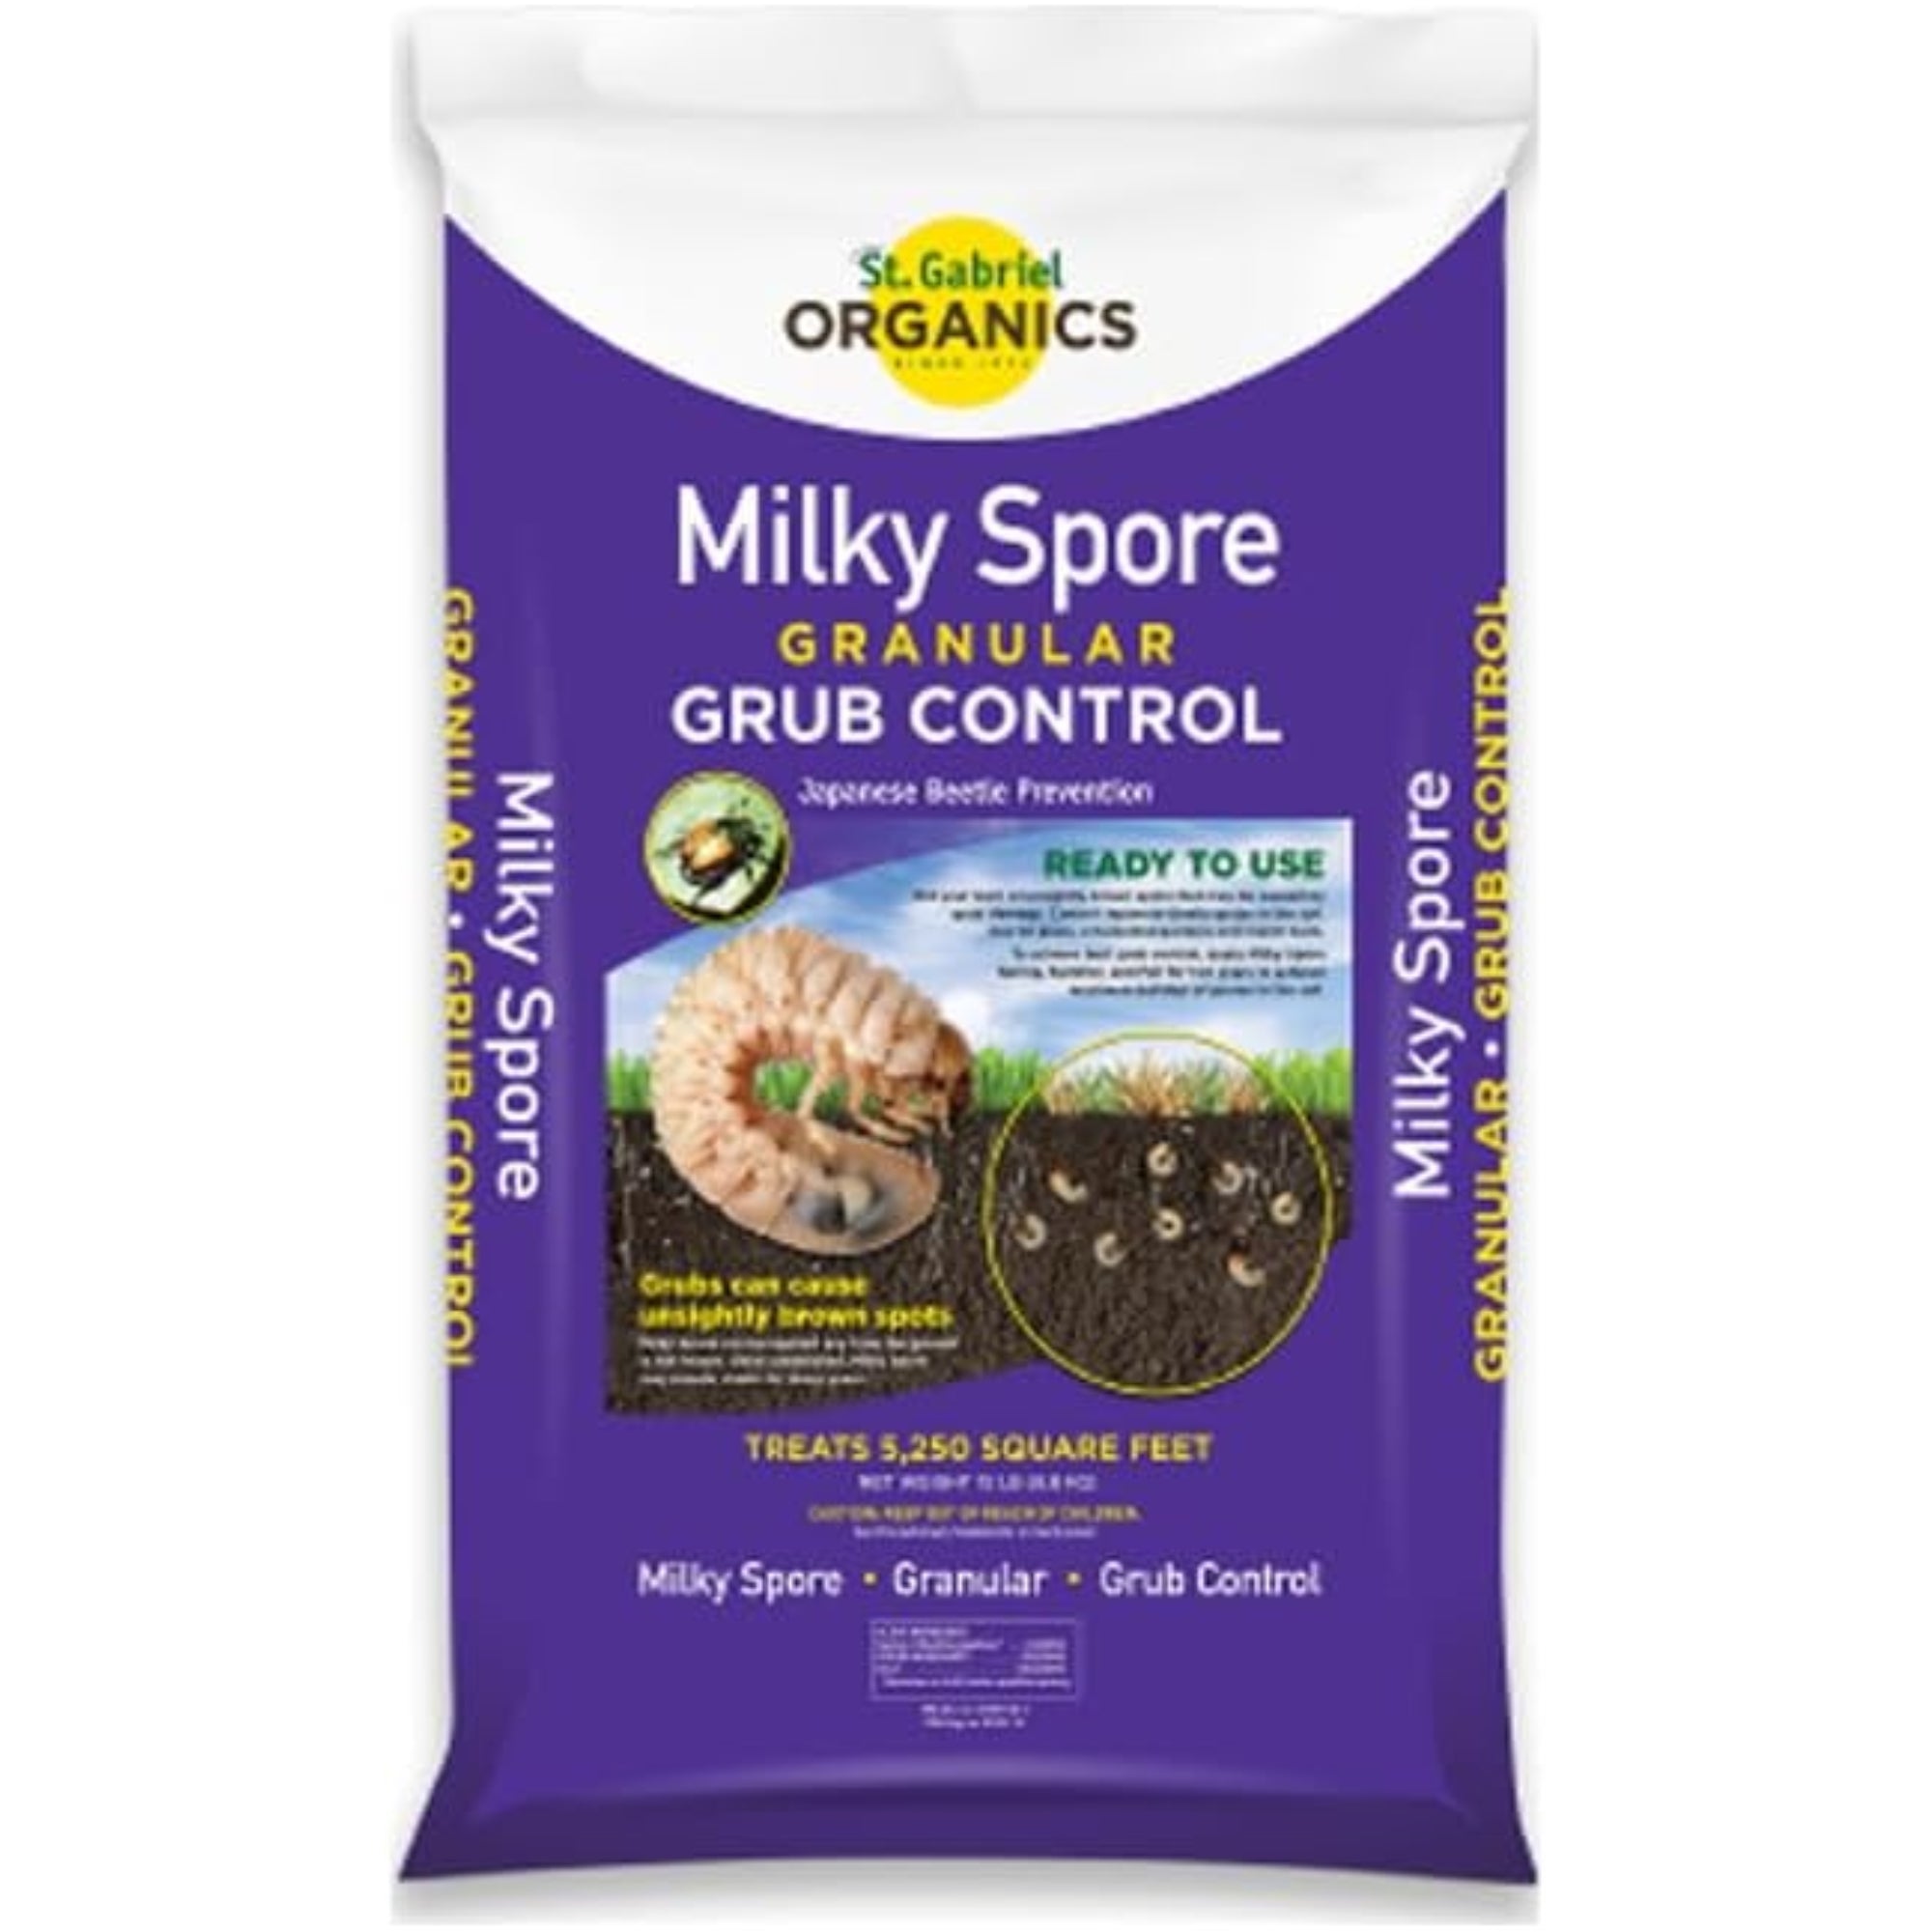 St. Gabriel Organics Milky Spore Japanese Beetle Grub Killer Granules For Lawns, 15lb Bag